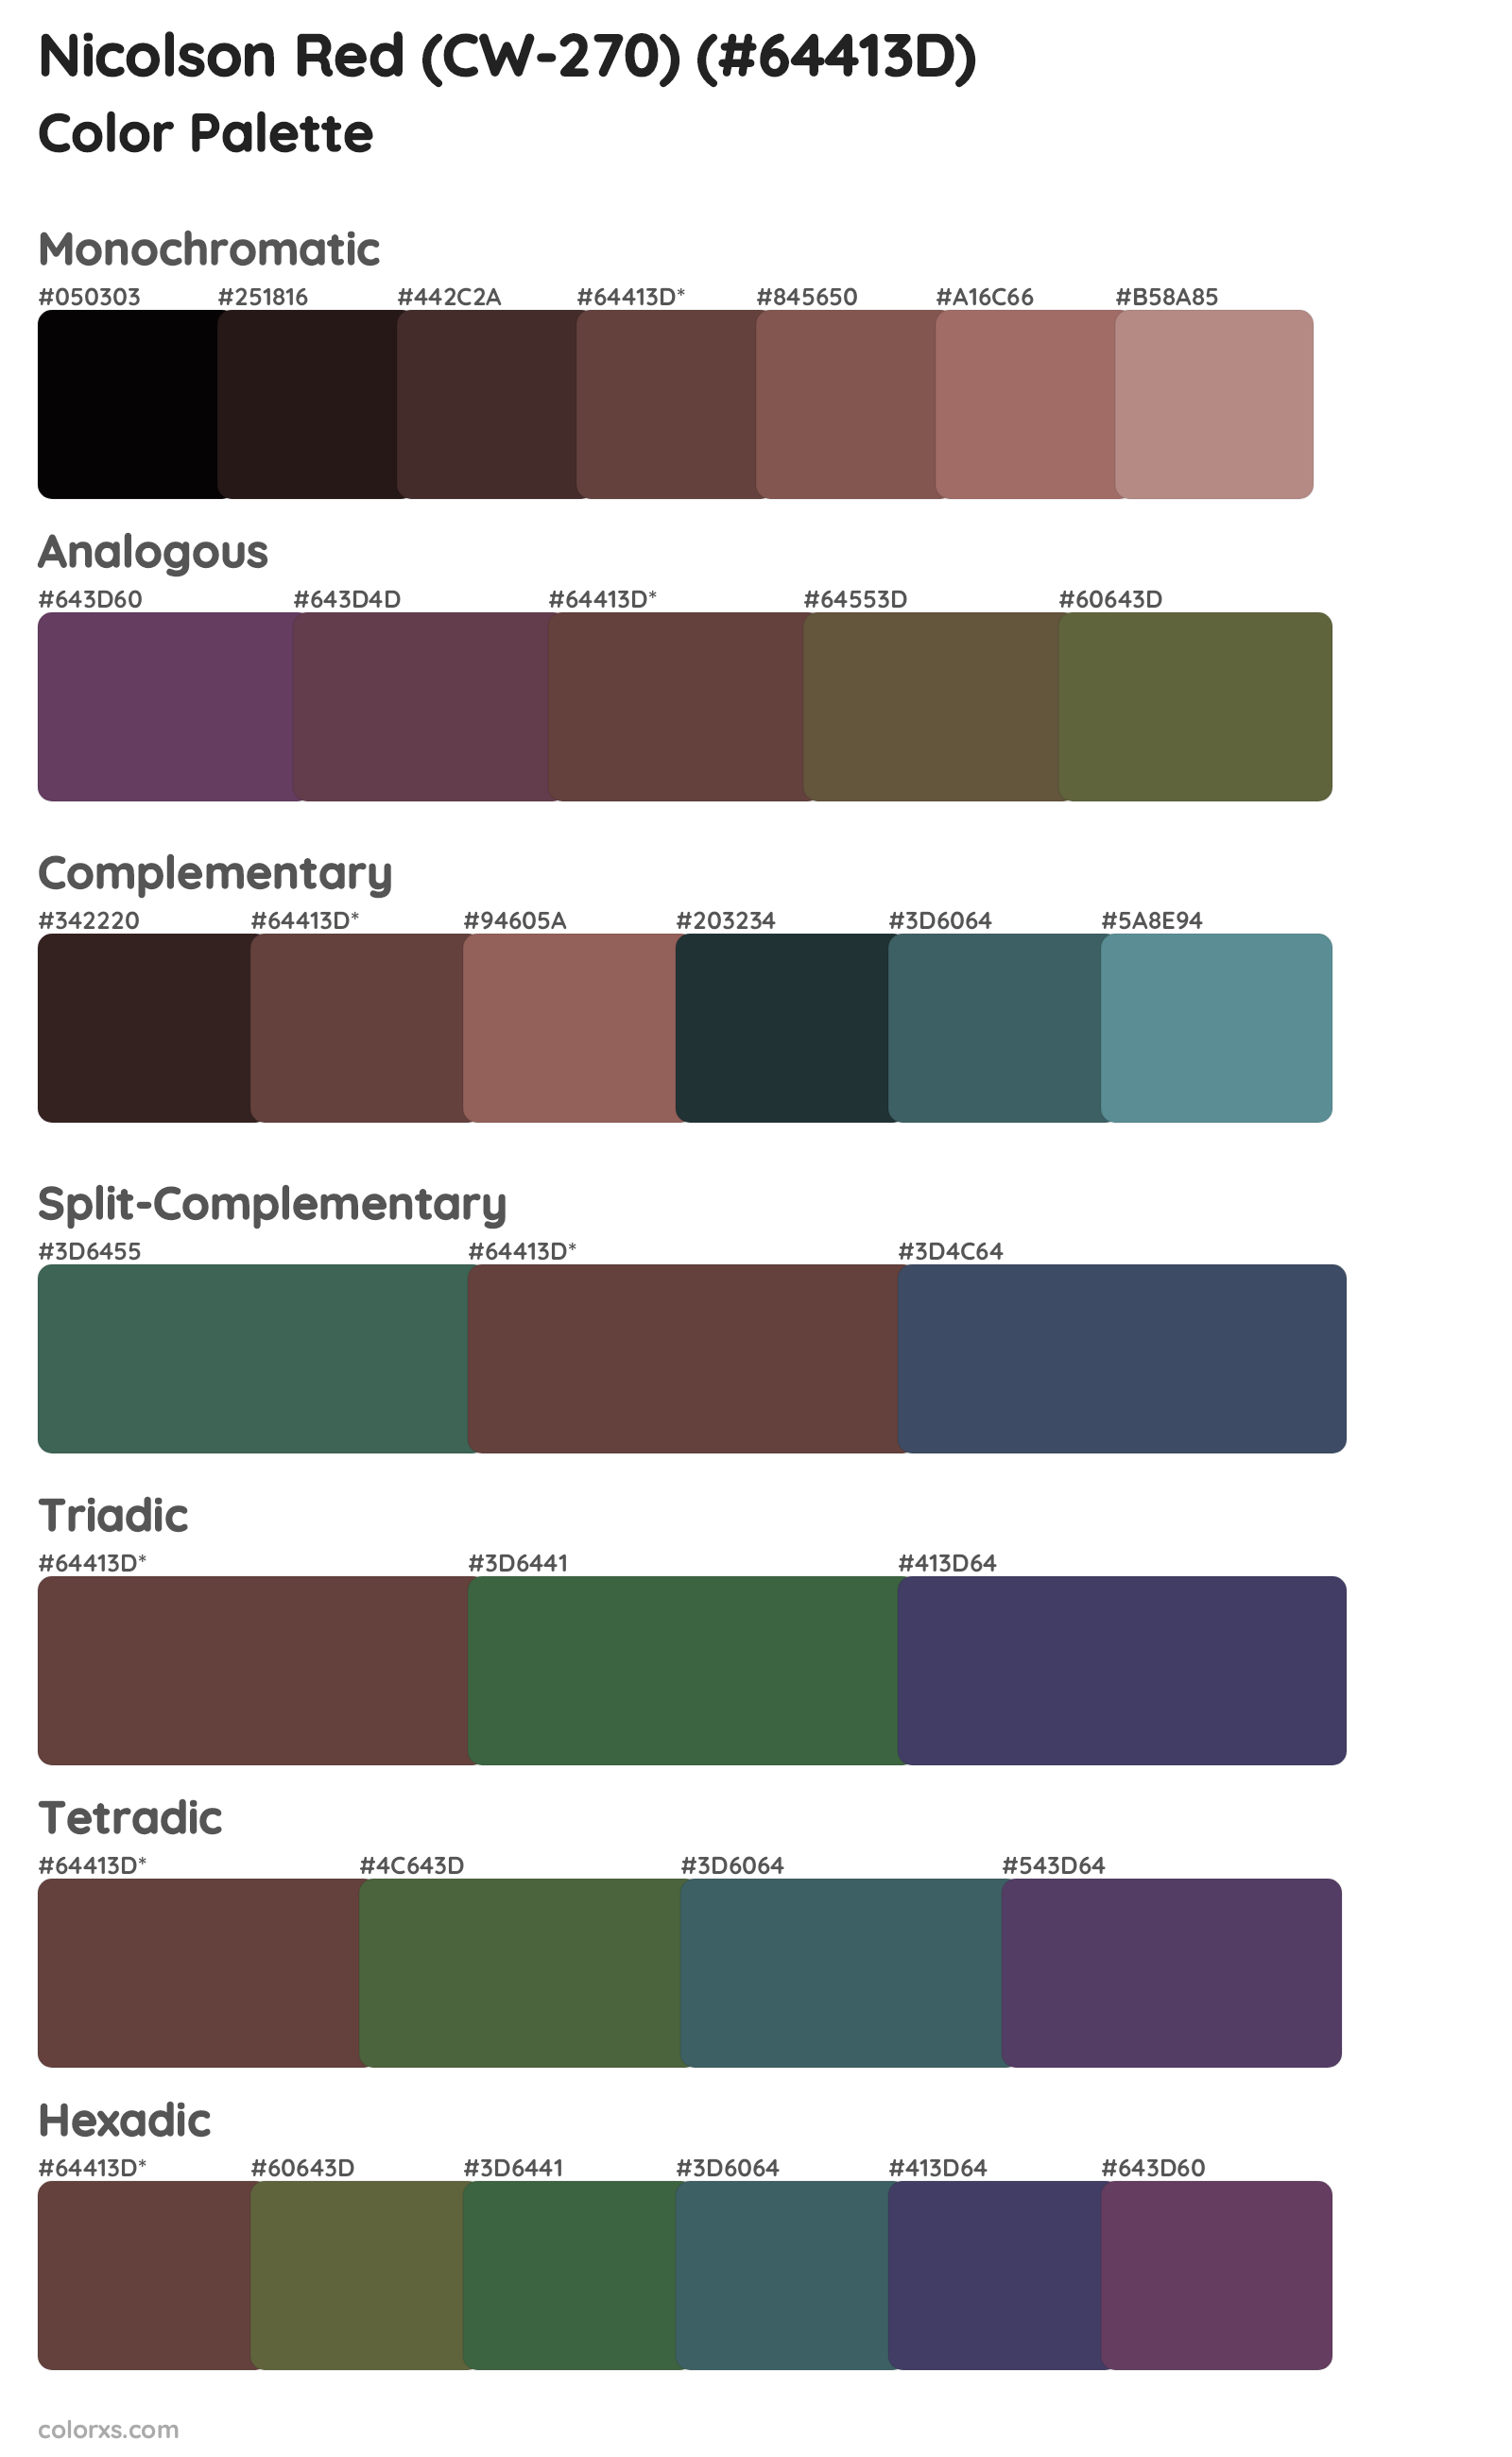 Nicolson Red (CW-270) Color Scheme Palettes